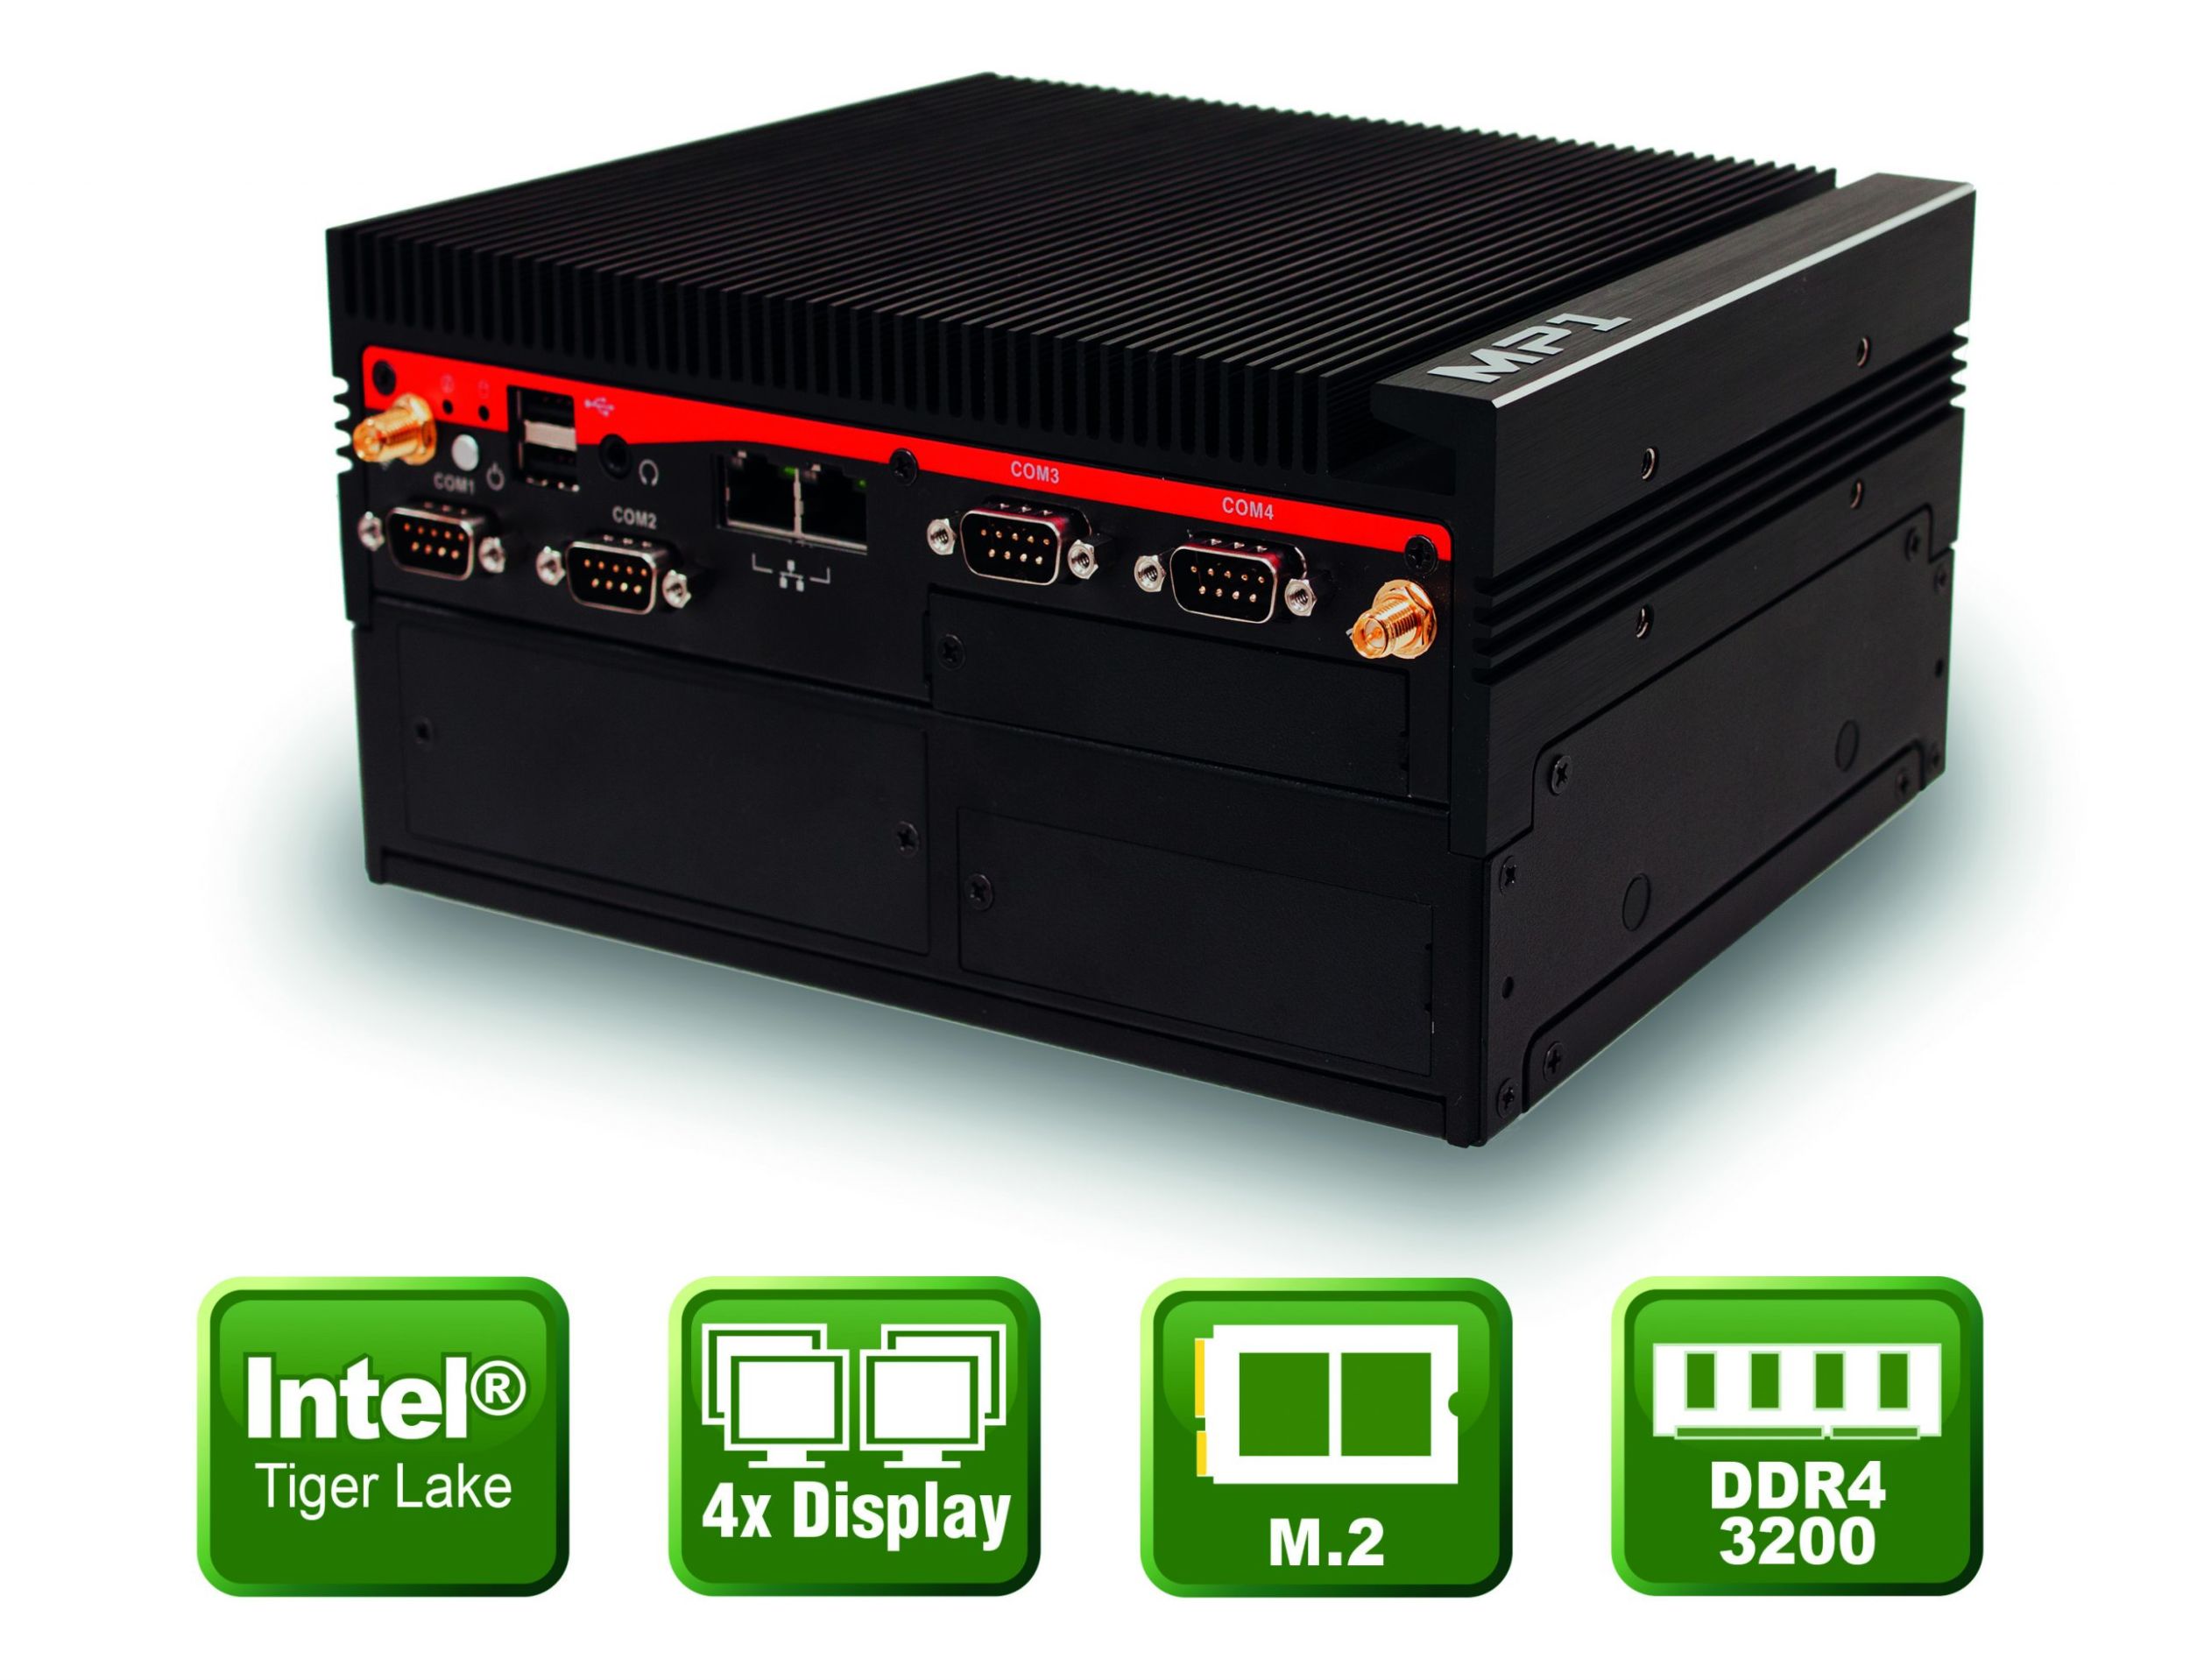 Erweiterbarer Embedded-PC mit Tiger-Lake-CPUs